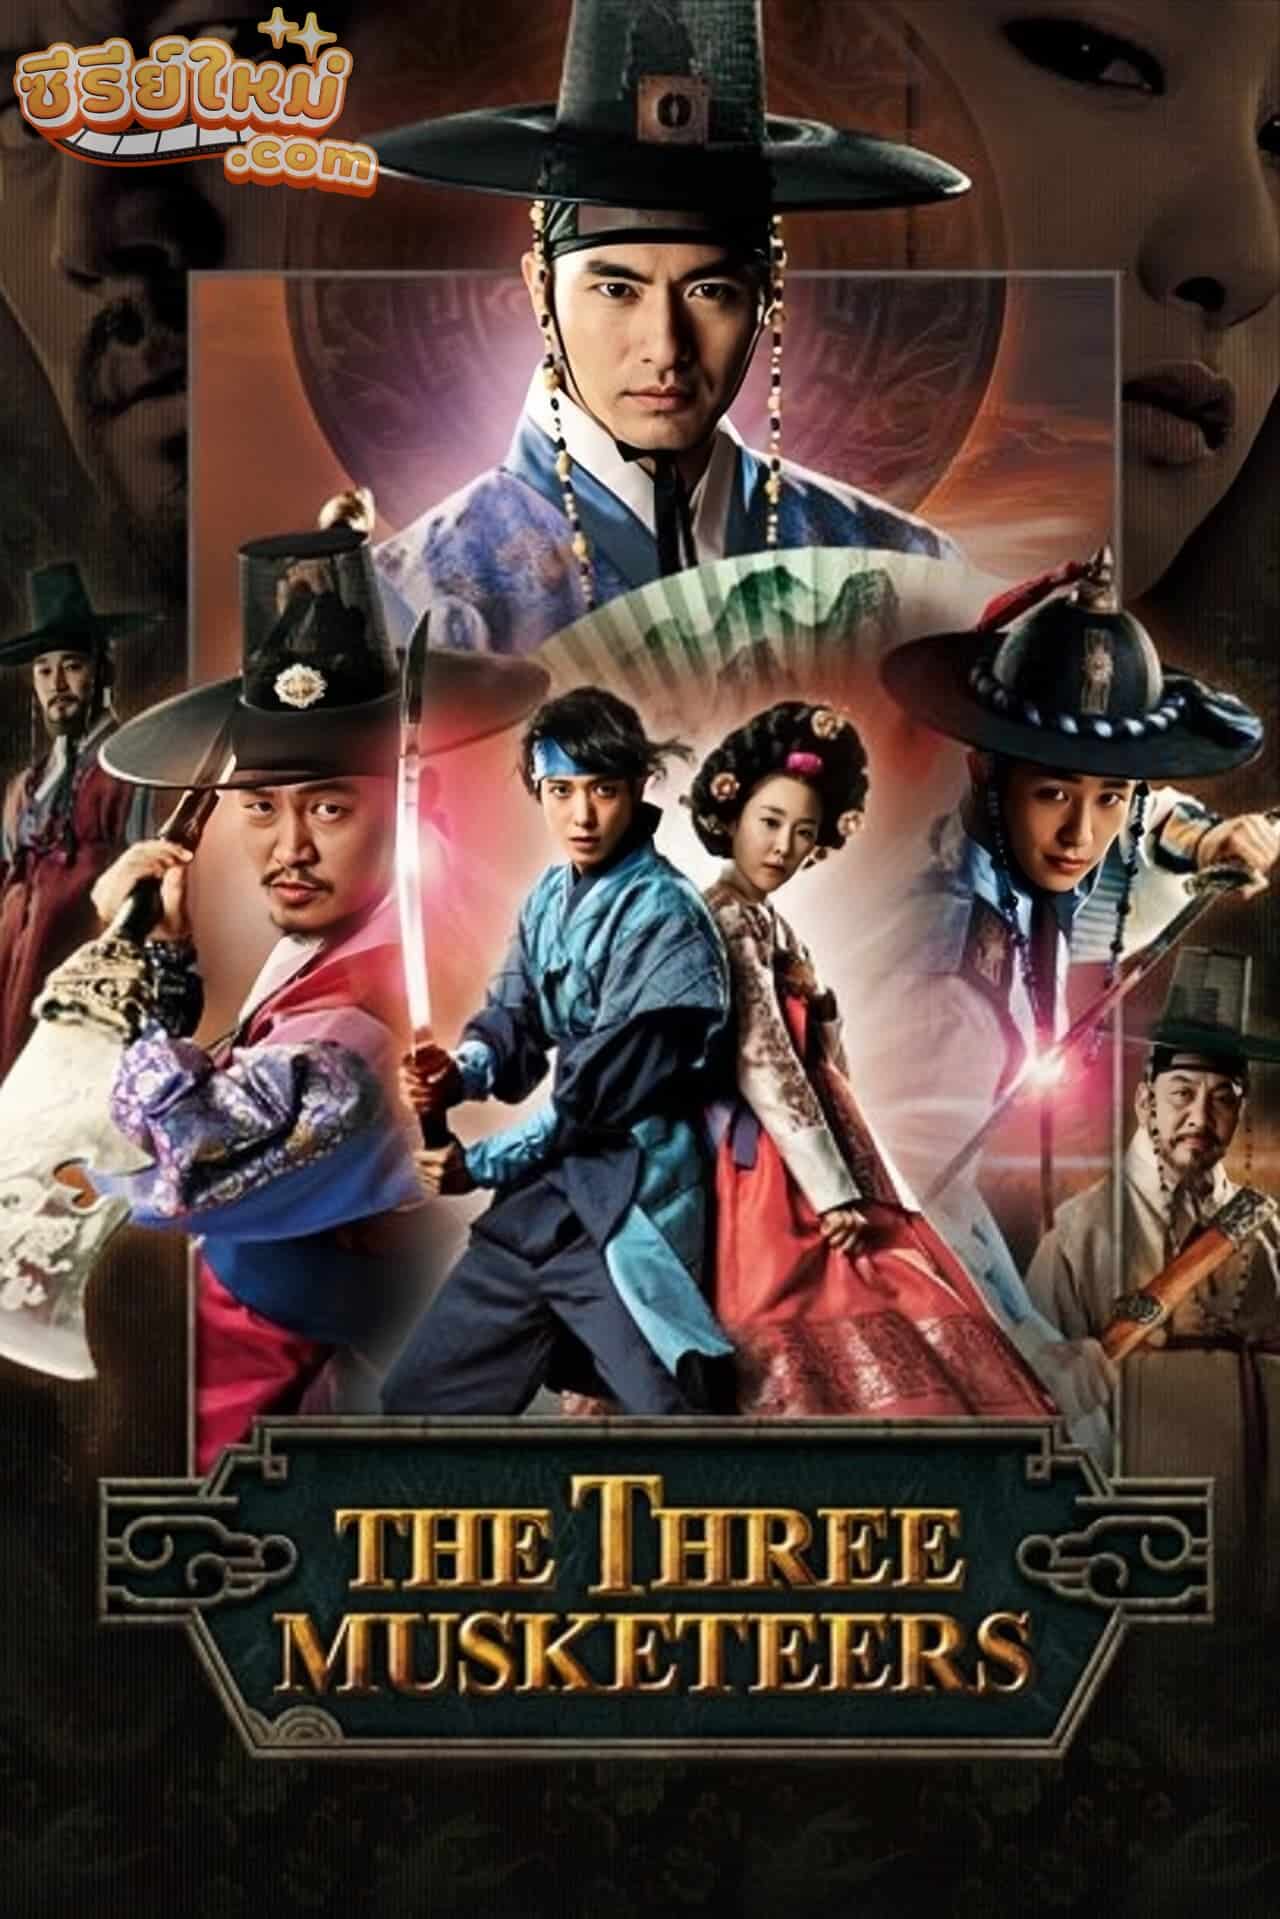 The Three Musketeers ซัมชองซา 3 ทหารเสือคู่บัลลังก์ (2014)